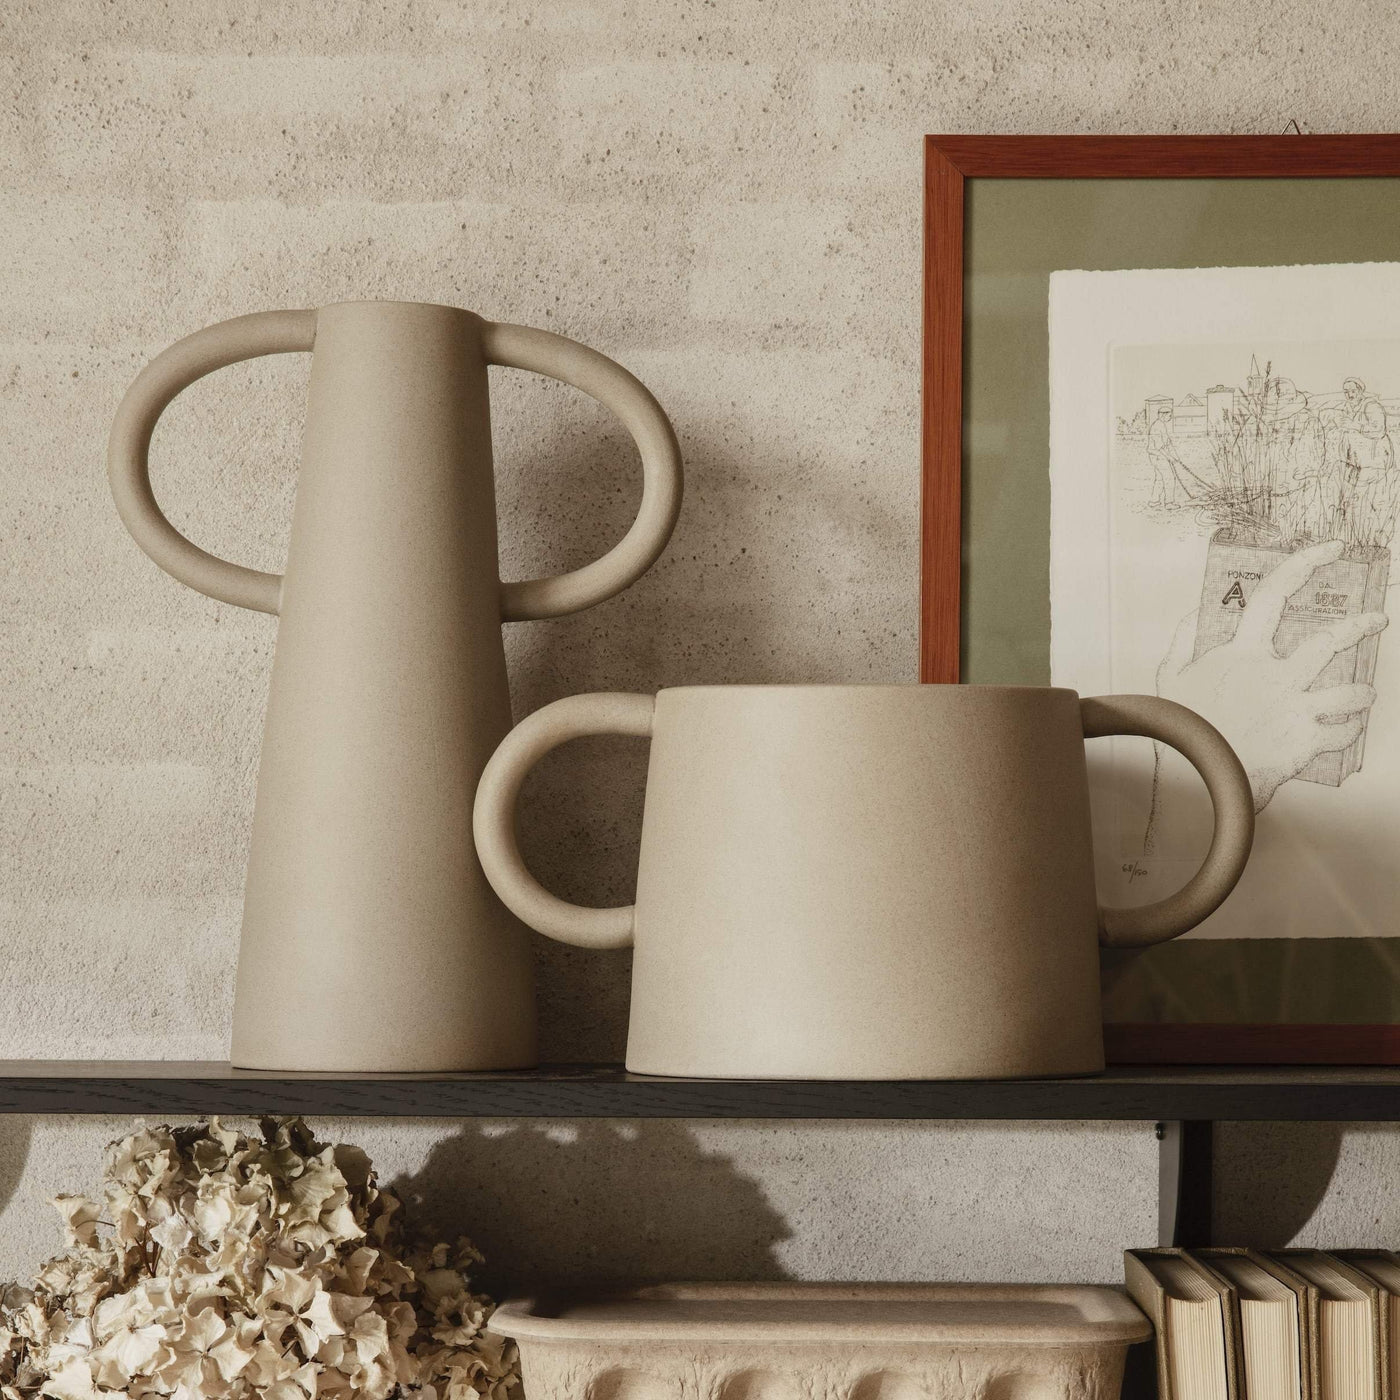 Ferm Living Anse Vase & Anse Pot. Shop online at someday designs